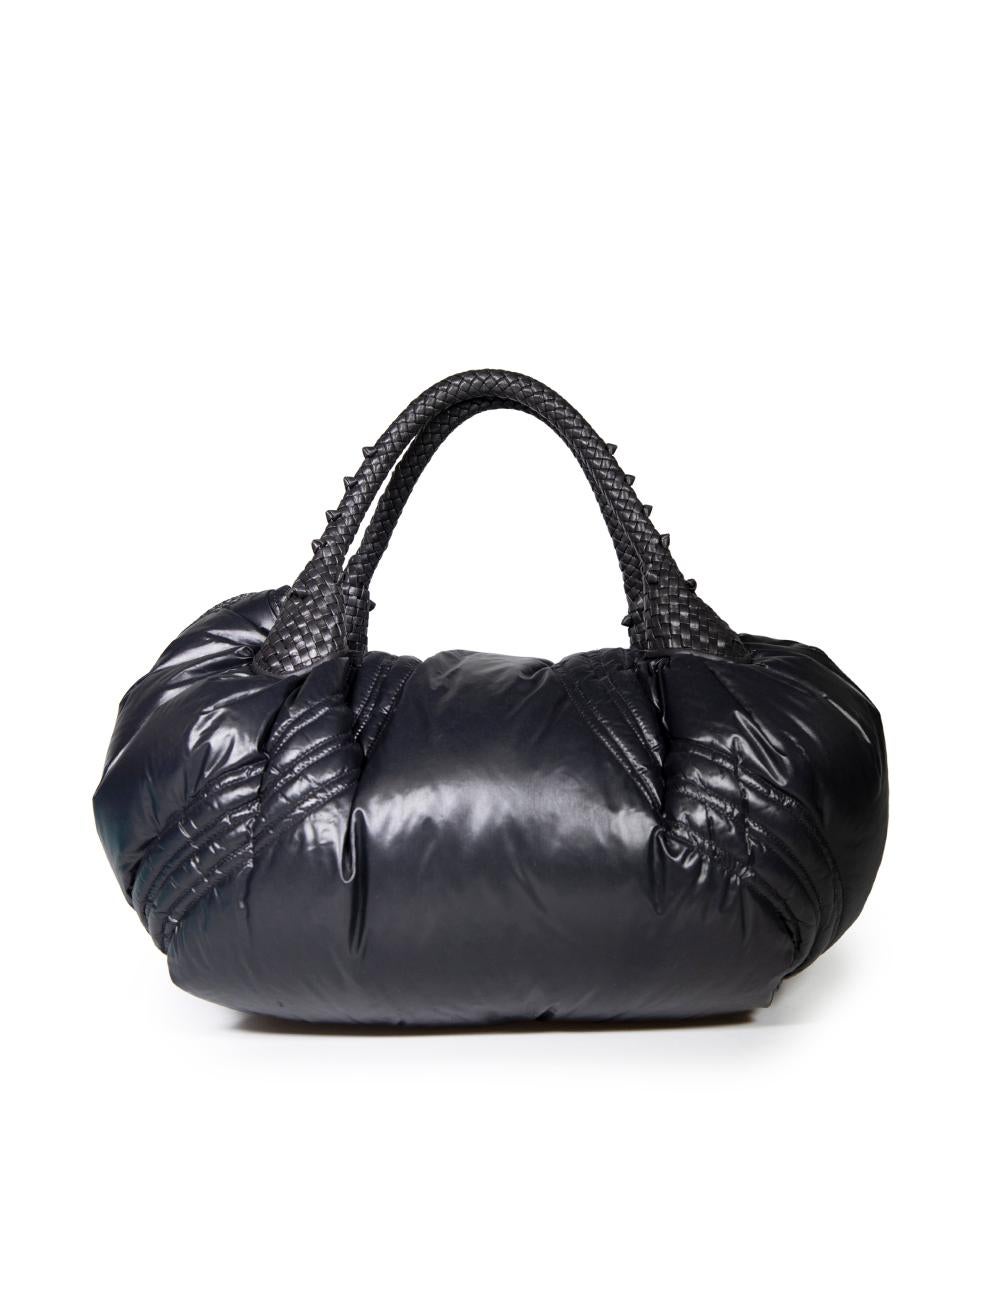 Fendi Fendi x Moncler Black Puffer Spy Bag In Good Condition For Sale In London, GB